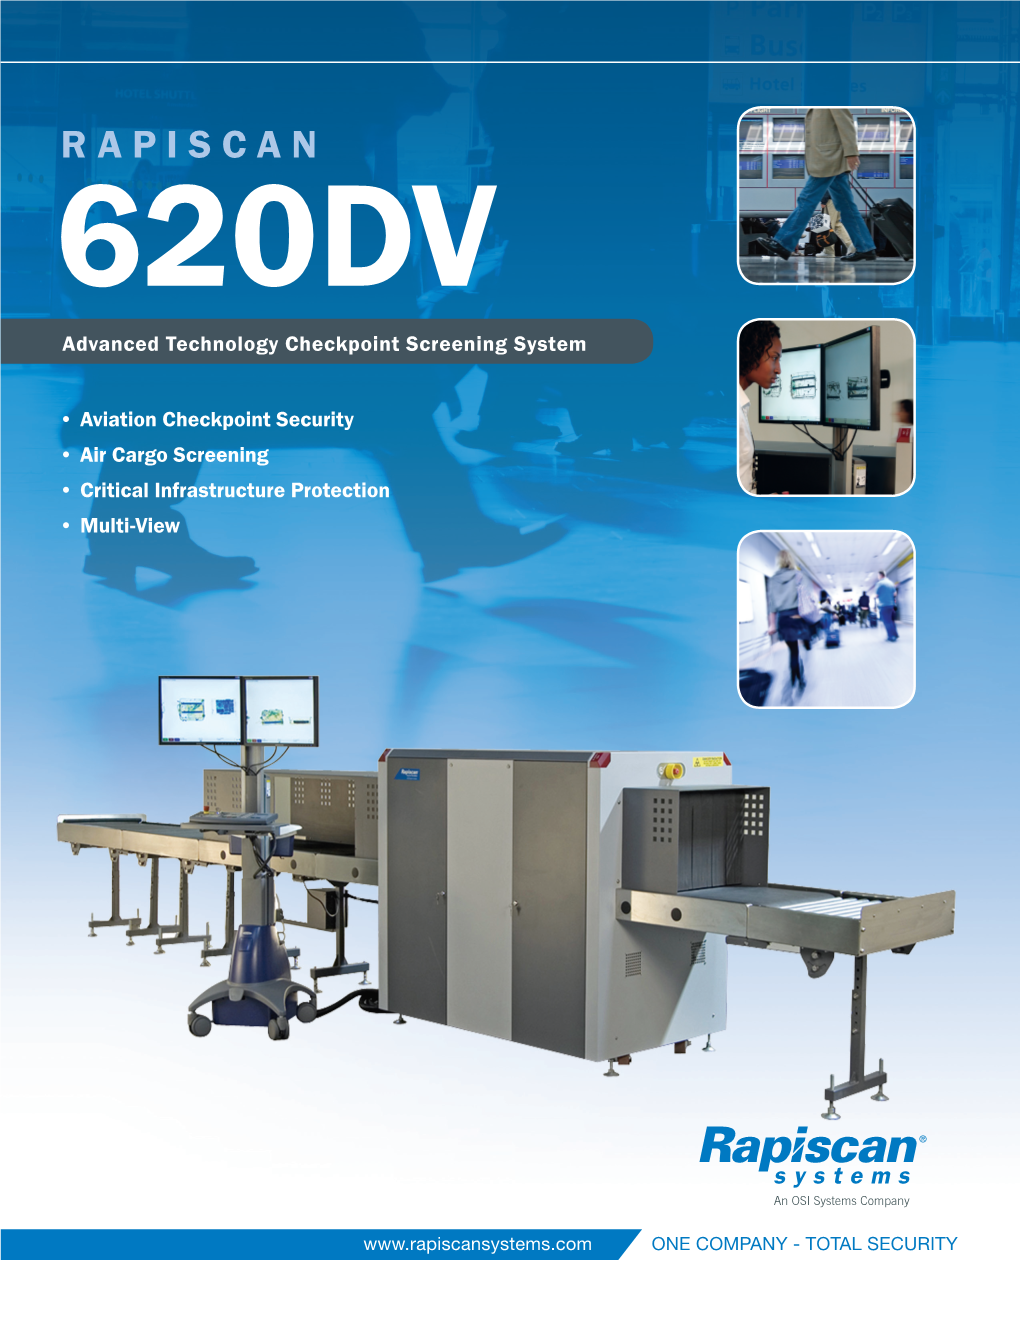 RAPISCAN 620DV Advanced Technology Checkpoint Screening System